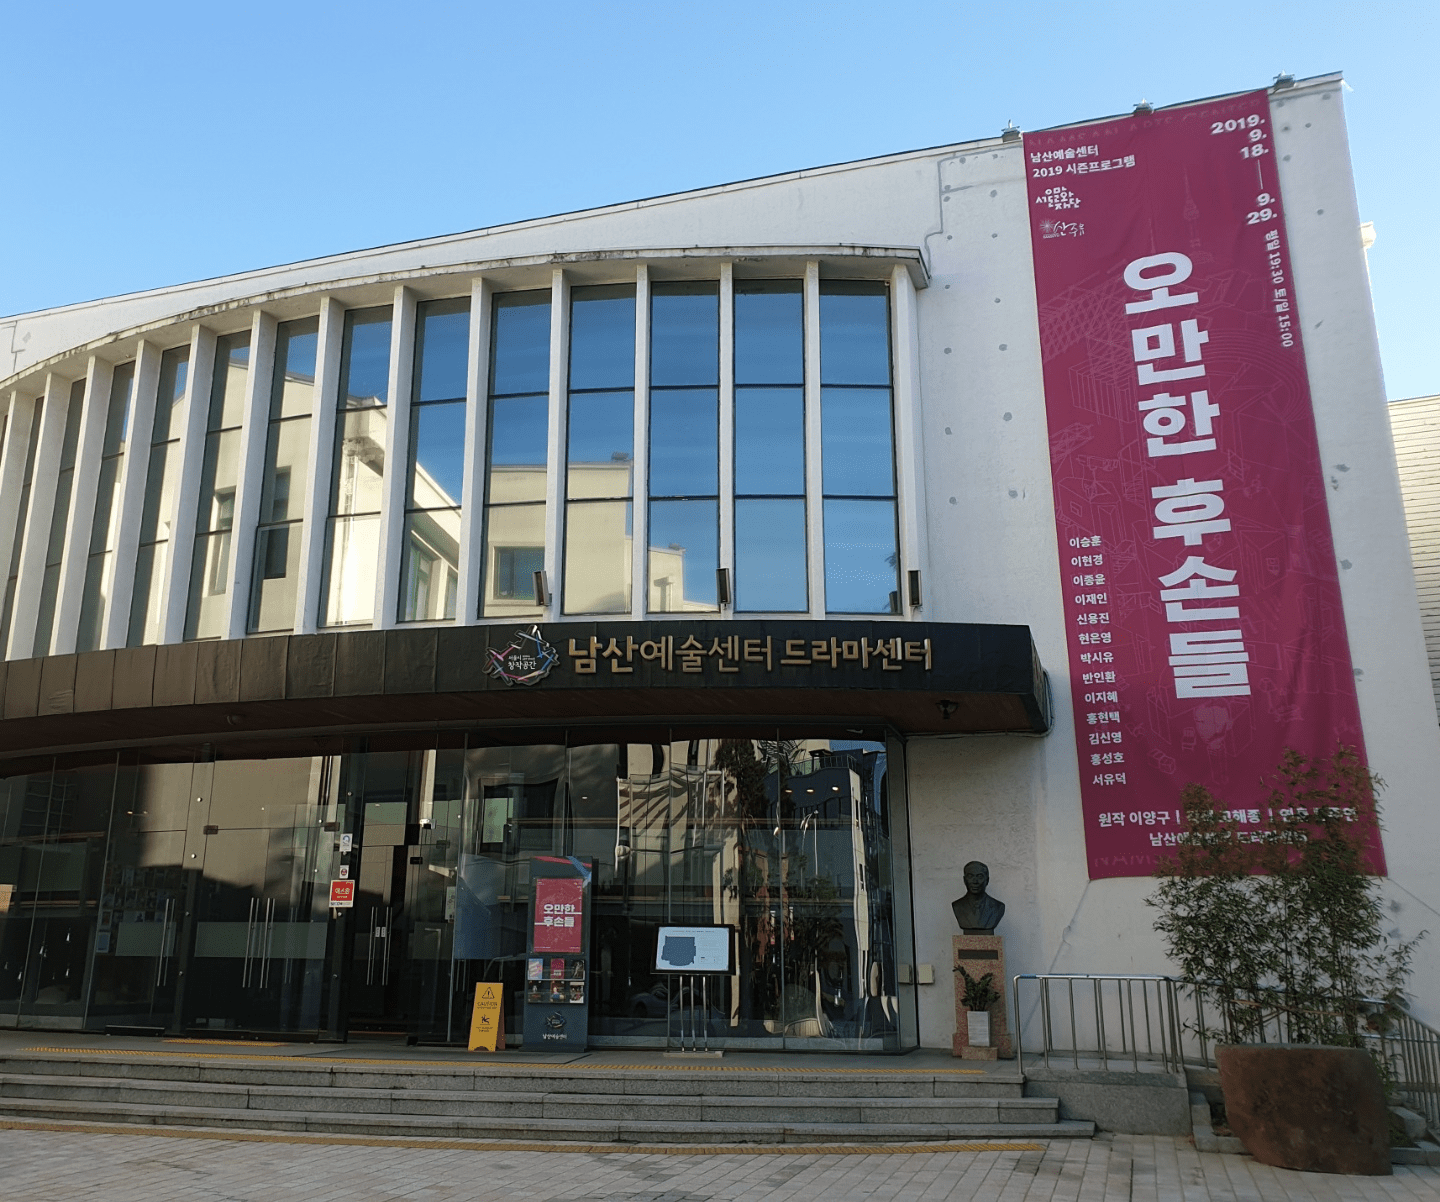 SM Institute - Dongnang Arts Foundation’s Namsan Arts Centre